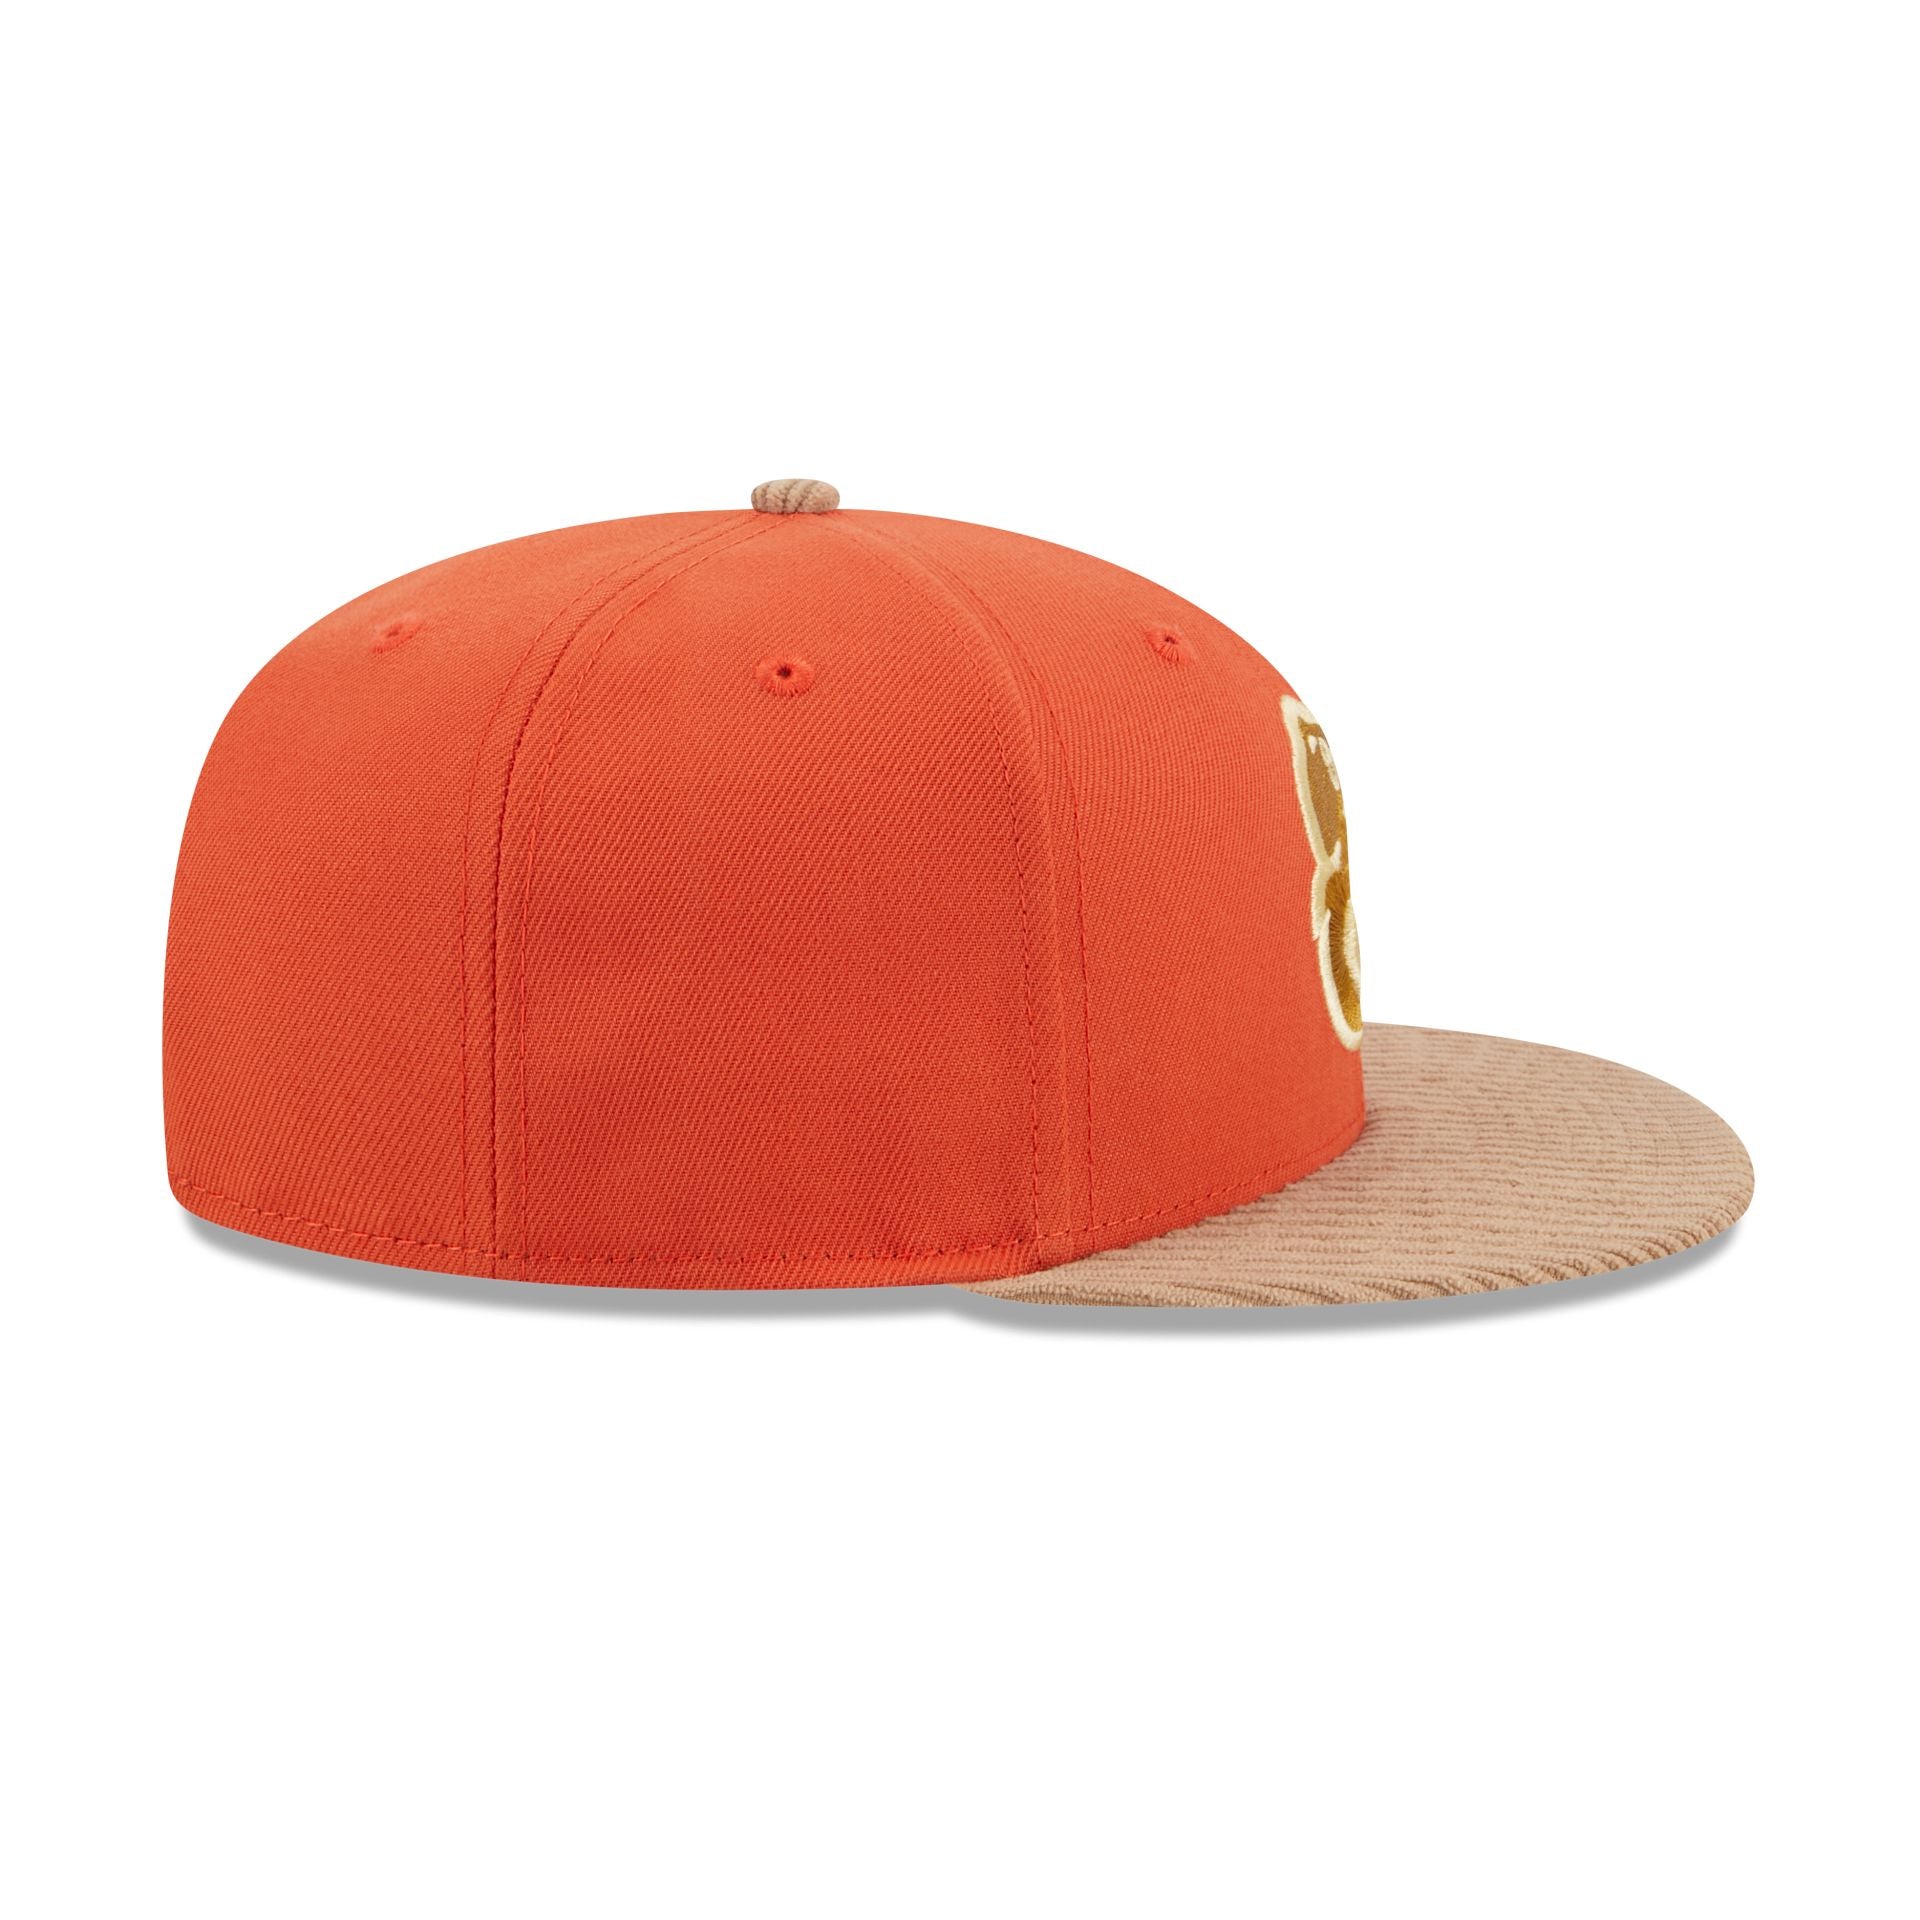 Baltimore Orioles Autumn Wheat 9FIFTY Snapback Hat, Orange, MLB by New Era